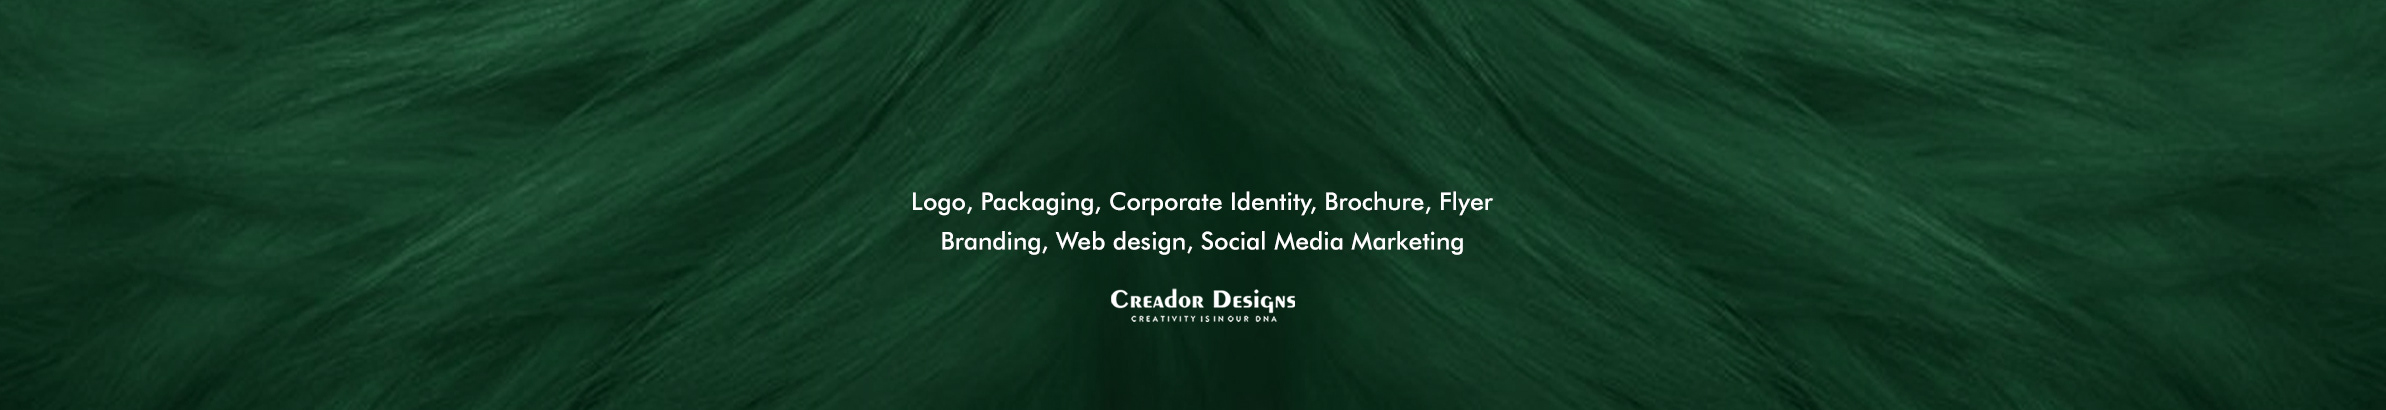 Creador Designs's profile banner